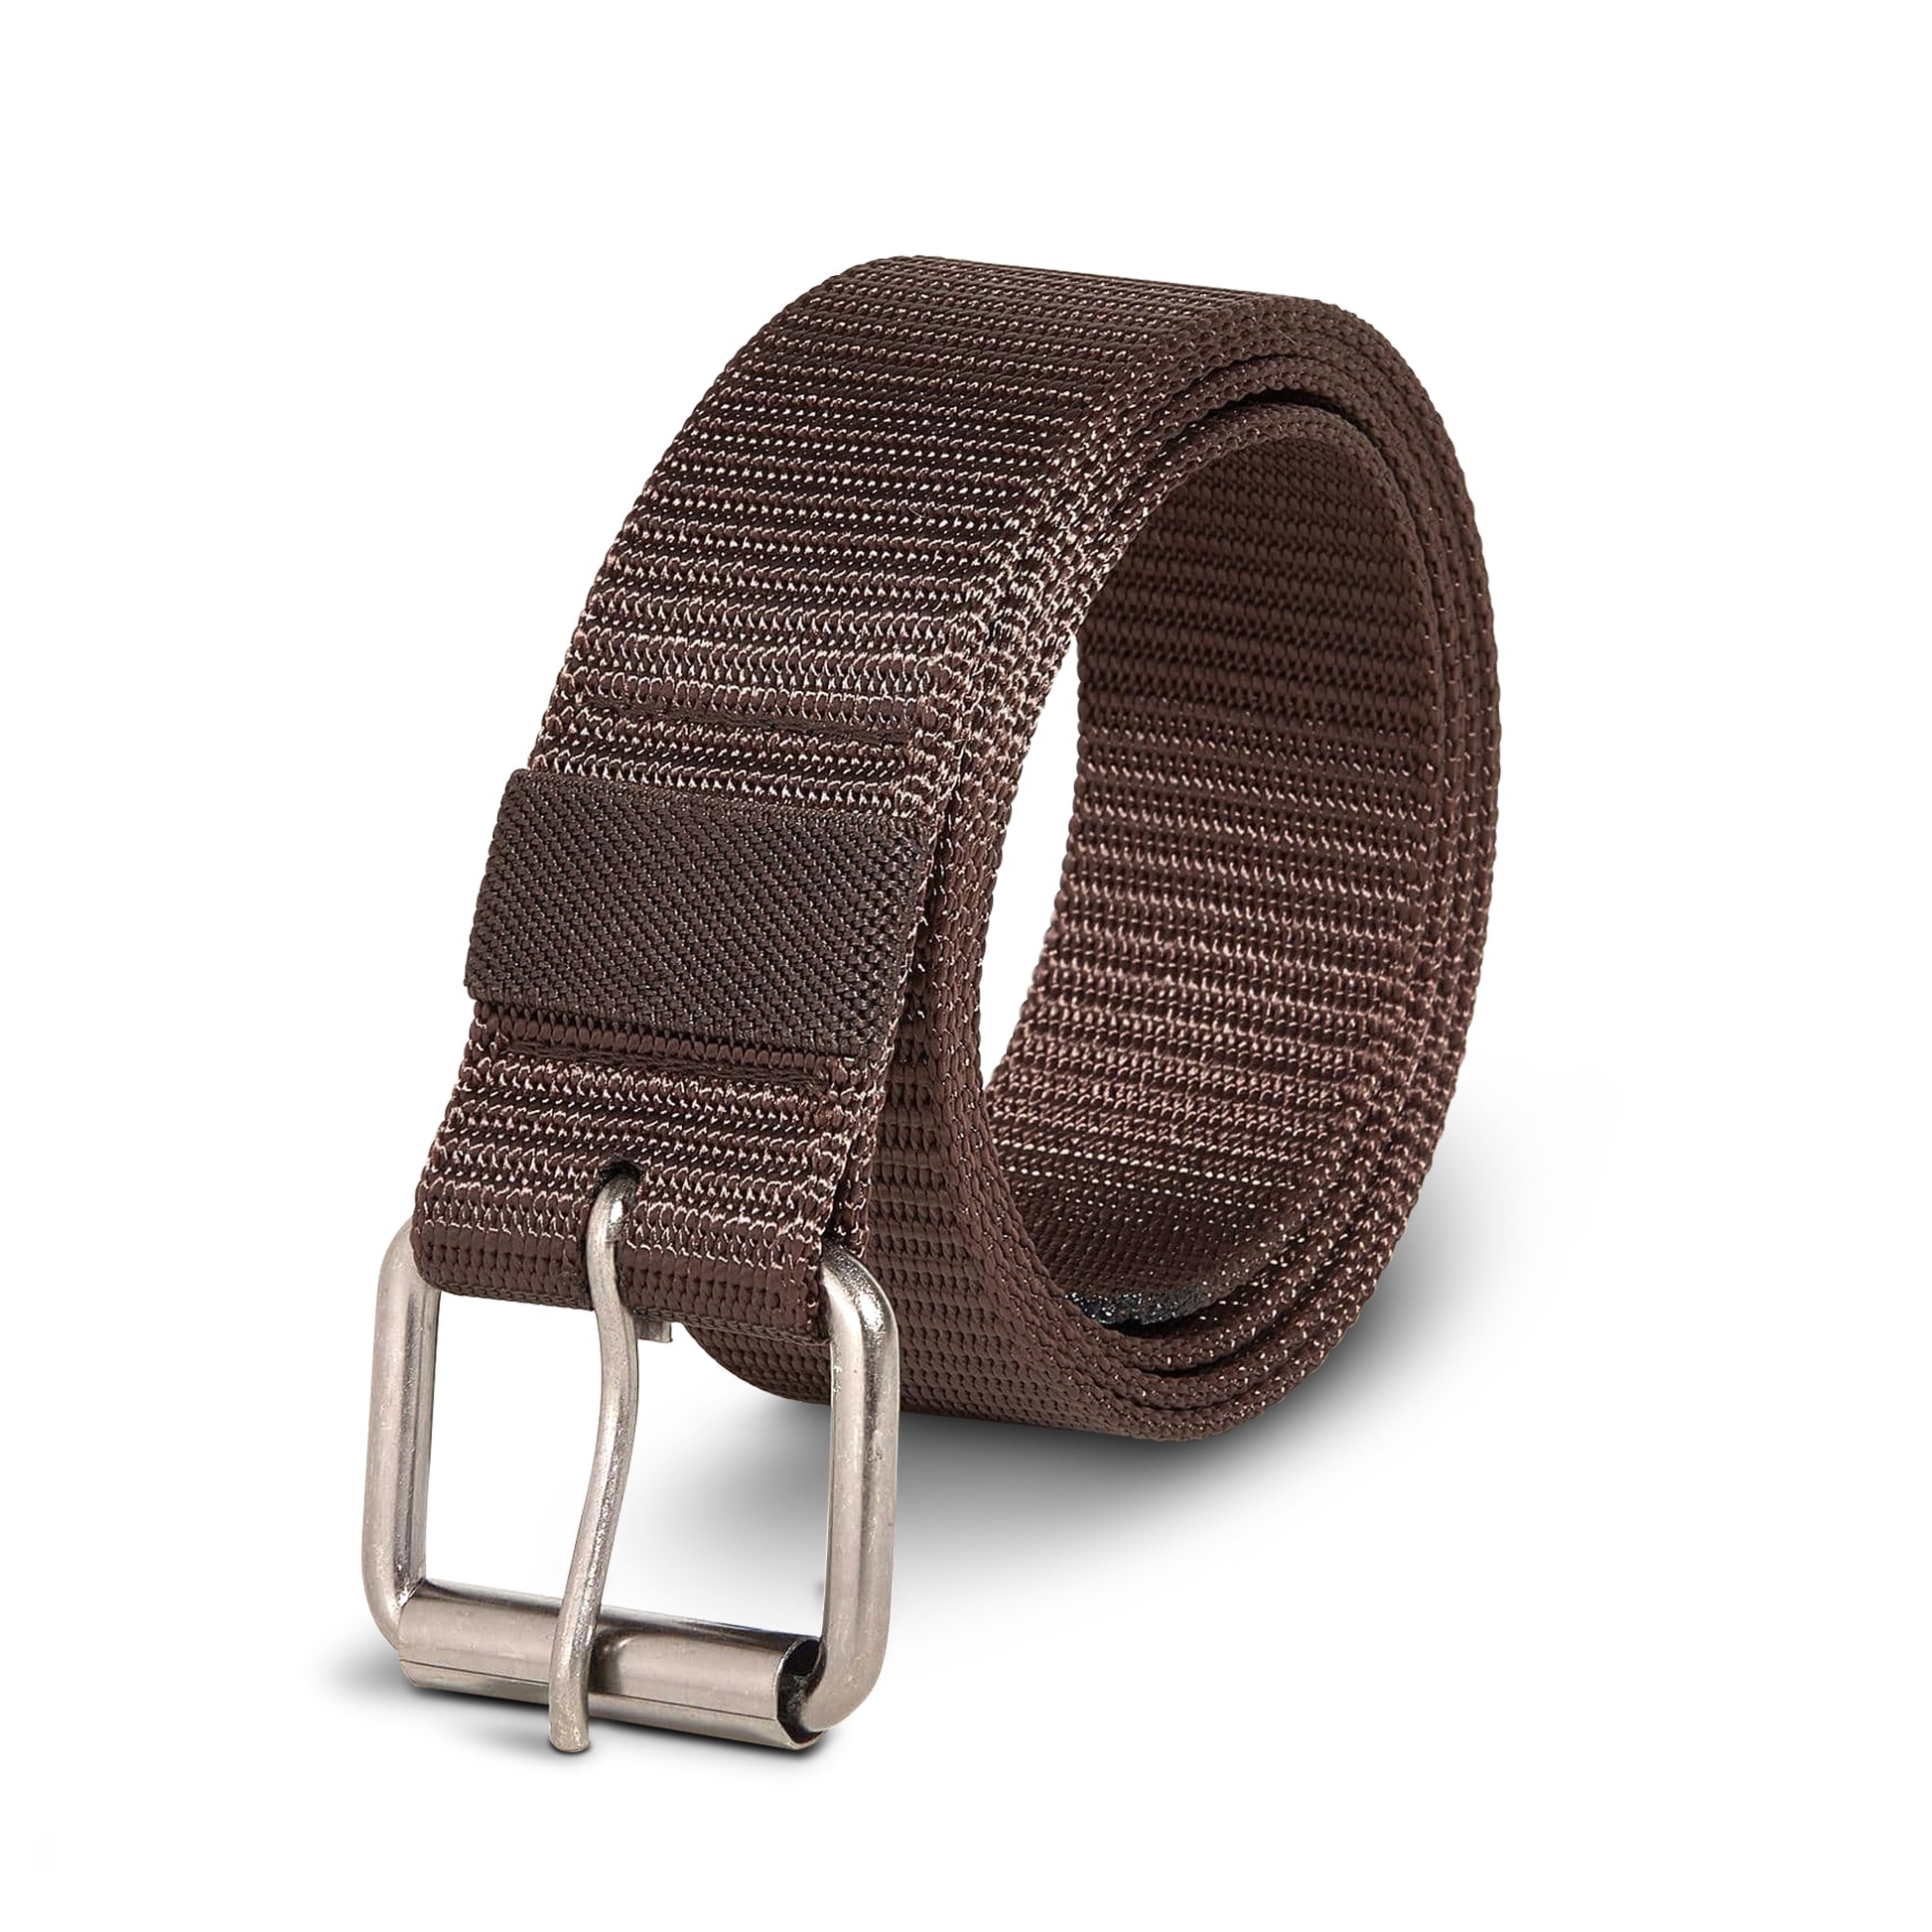 Pin Buckle Belts for Men's